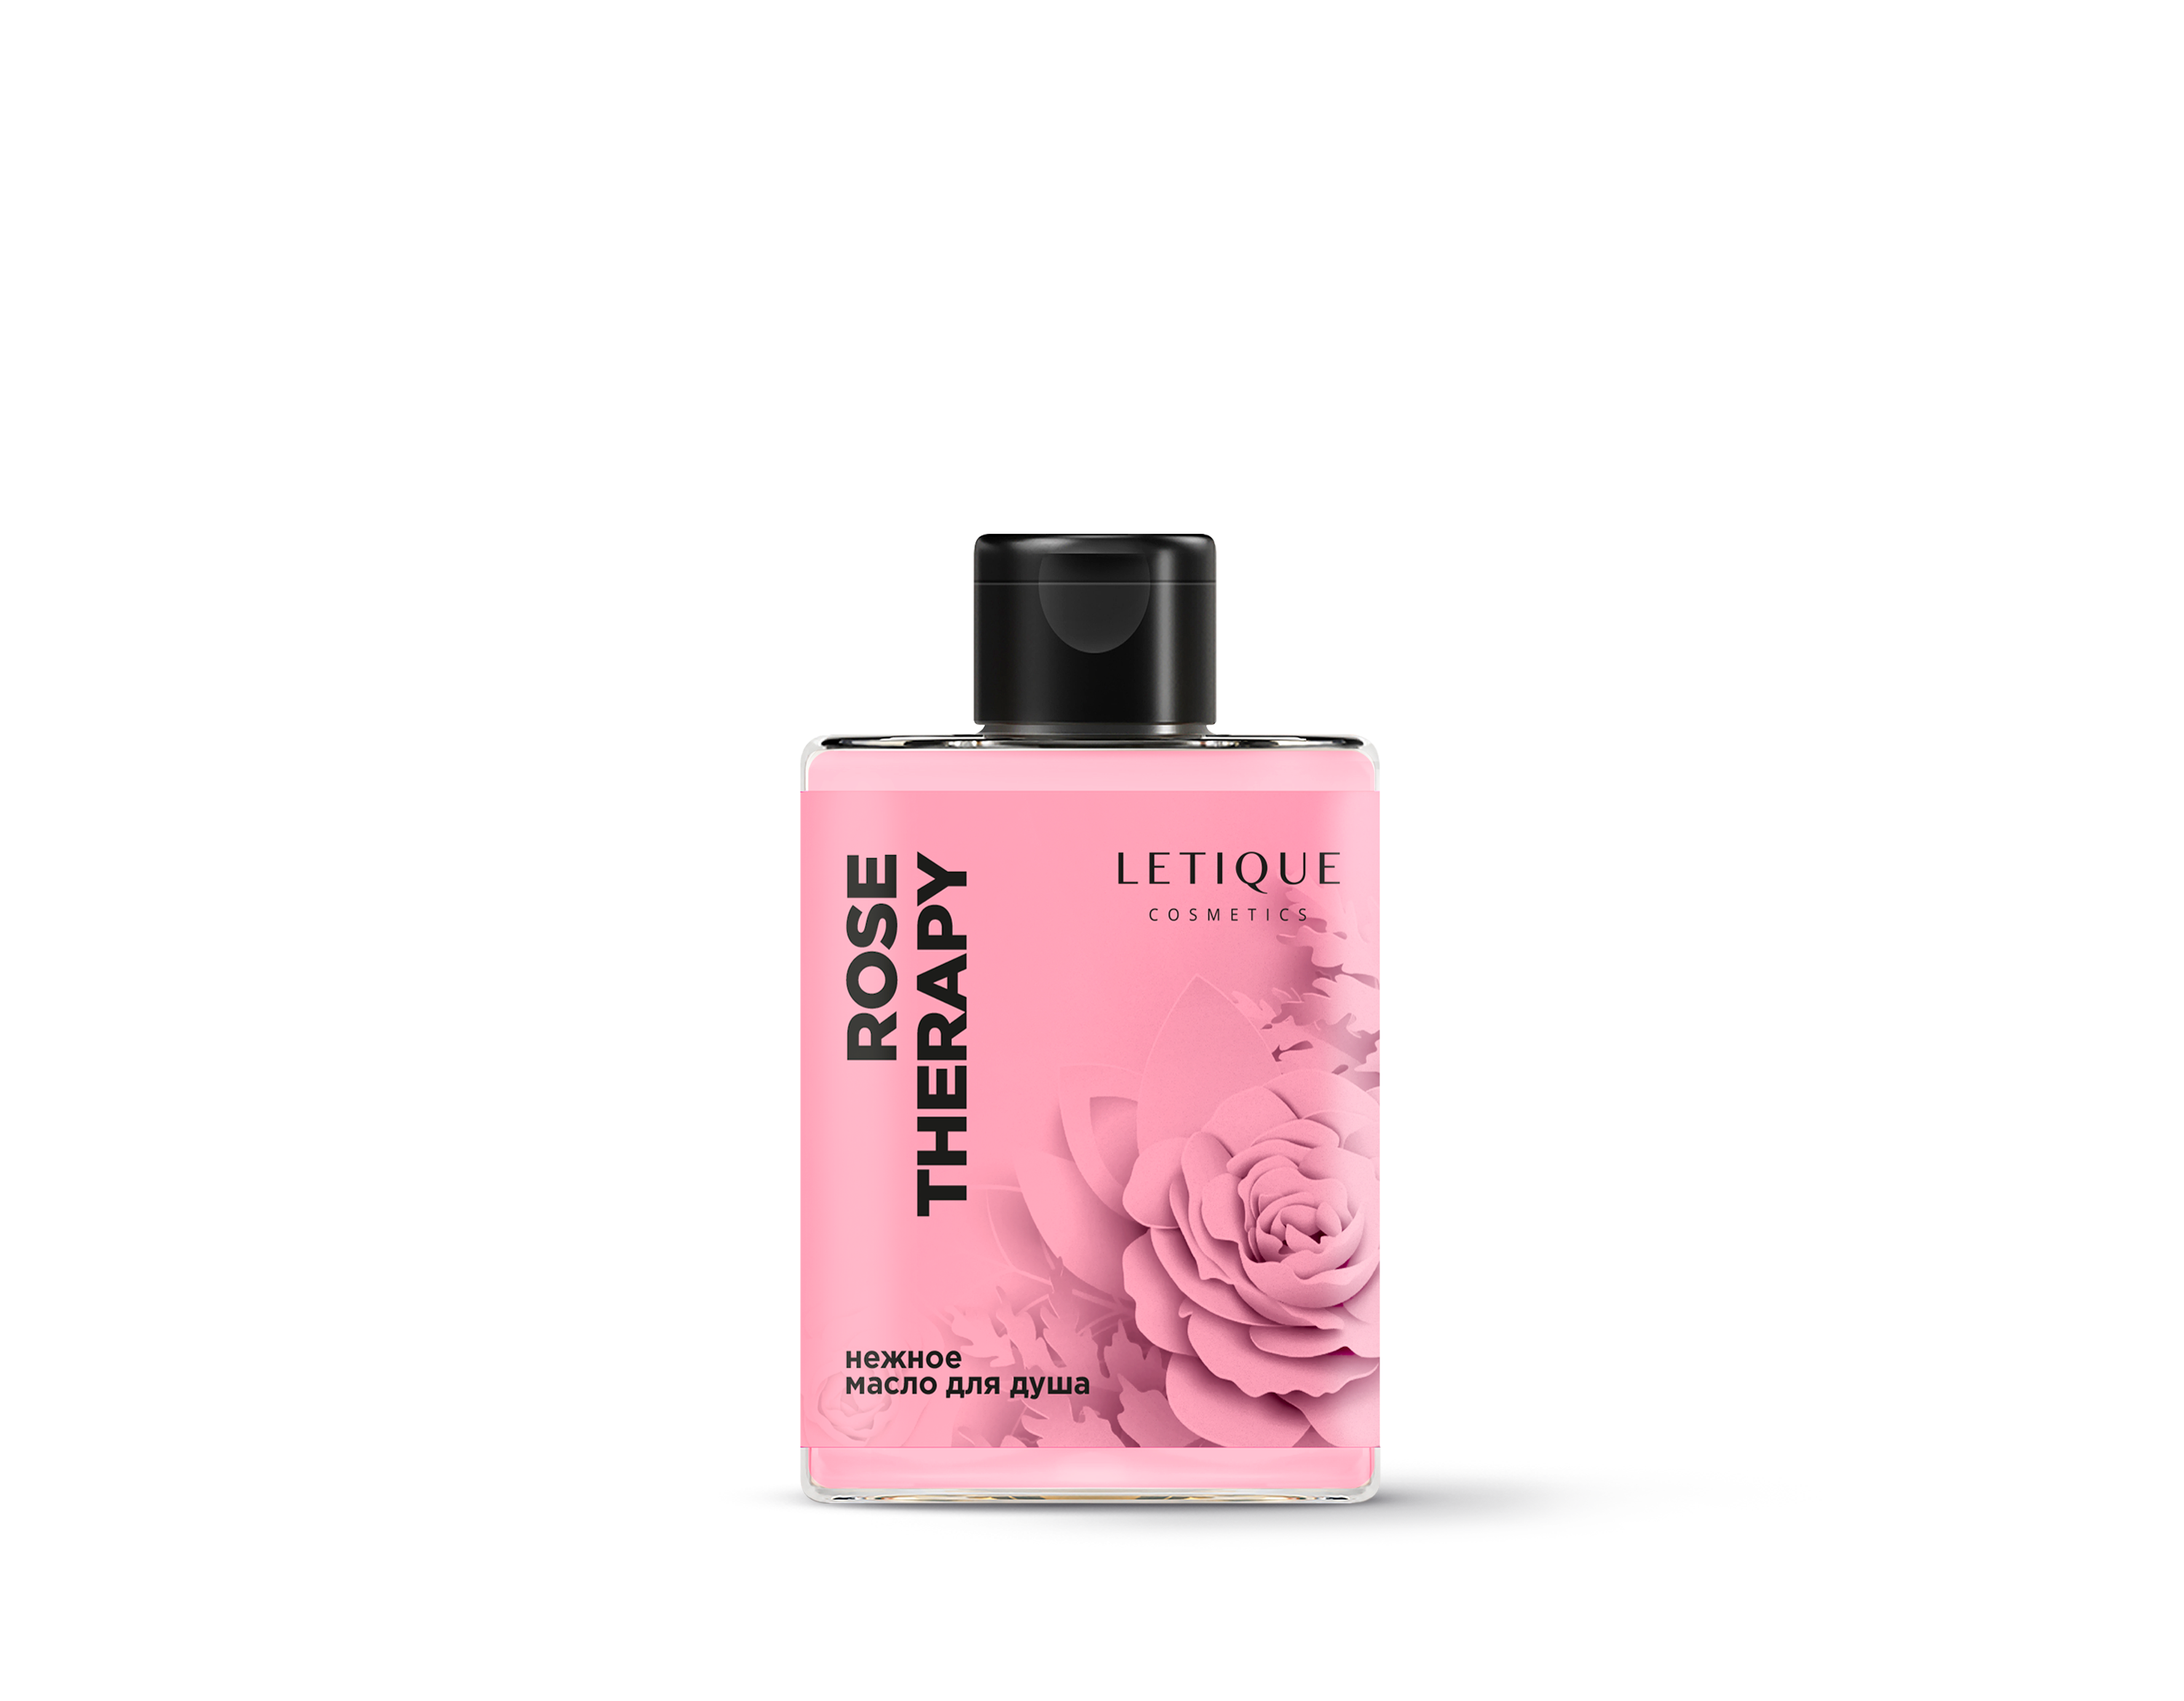 Нежное масло для душа Letique Cosmetics rose therapy - фото 1